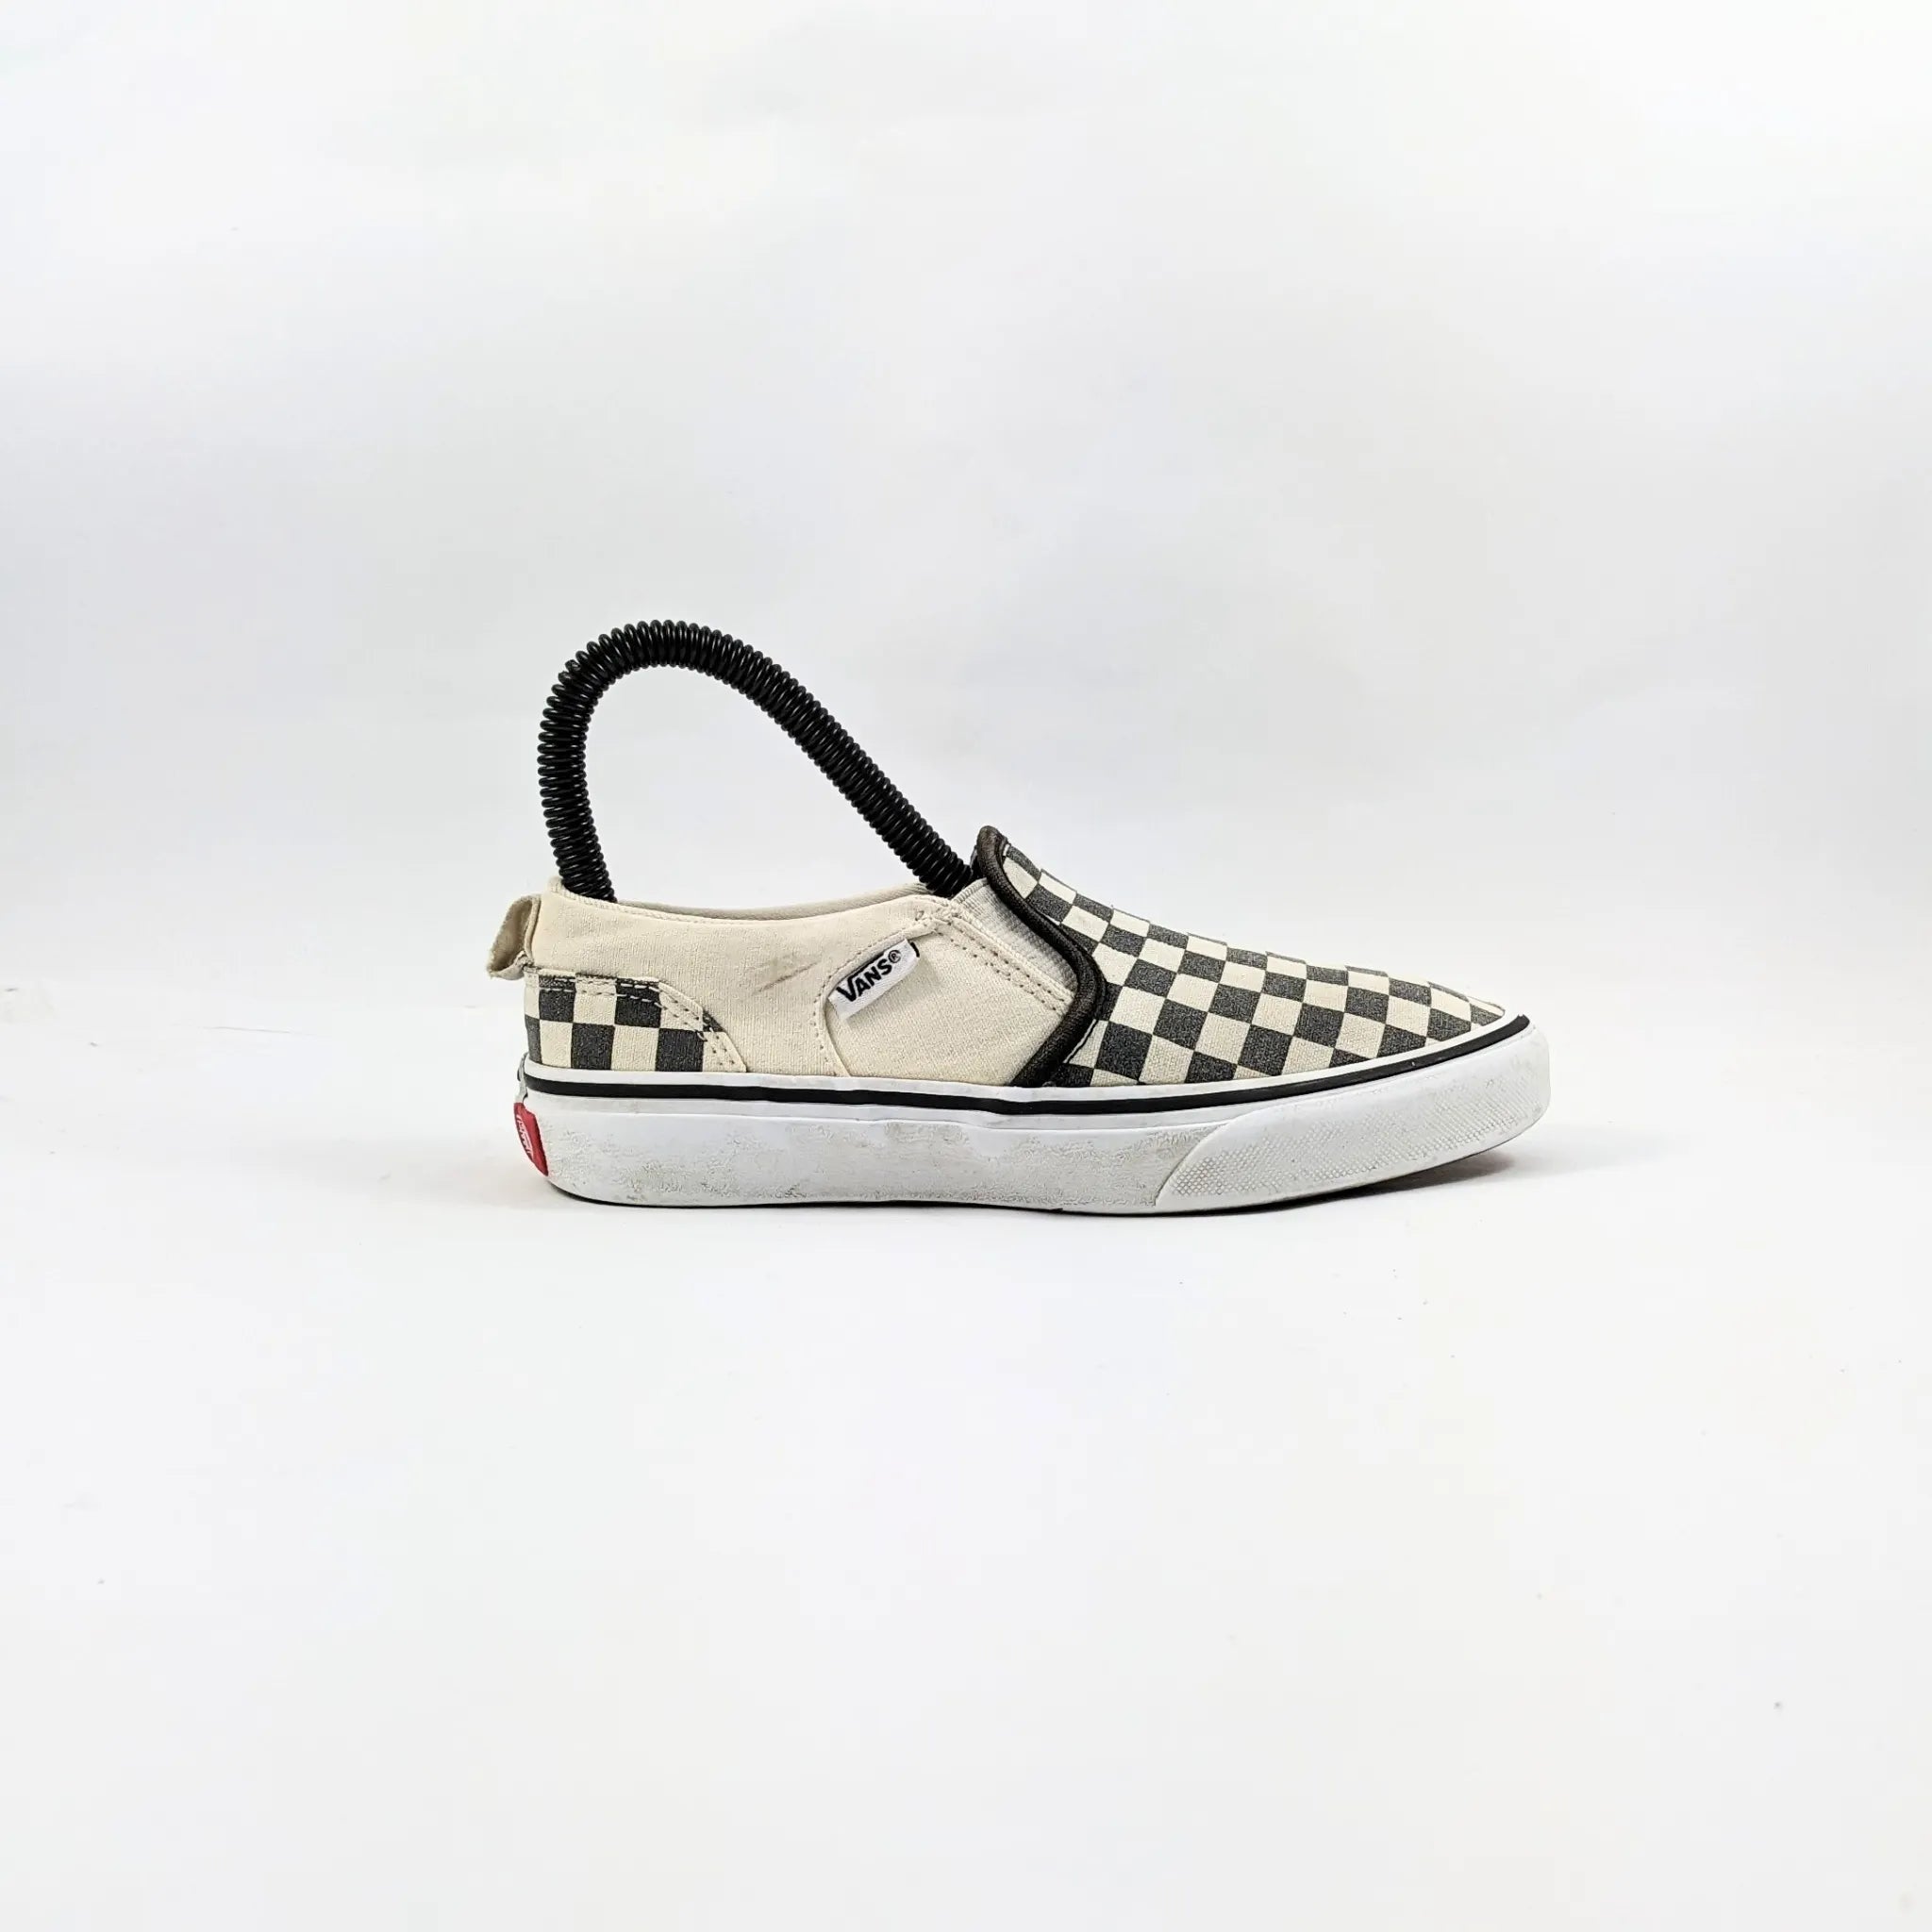 Vans White Checkerboard Slipons